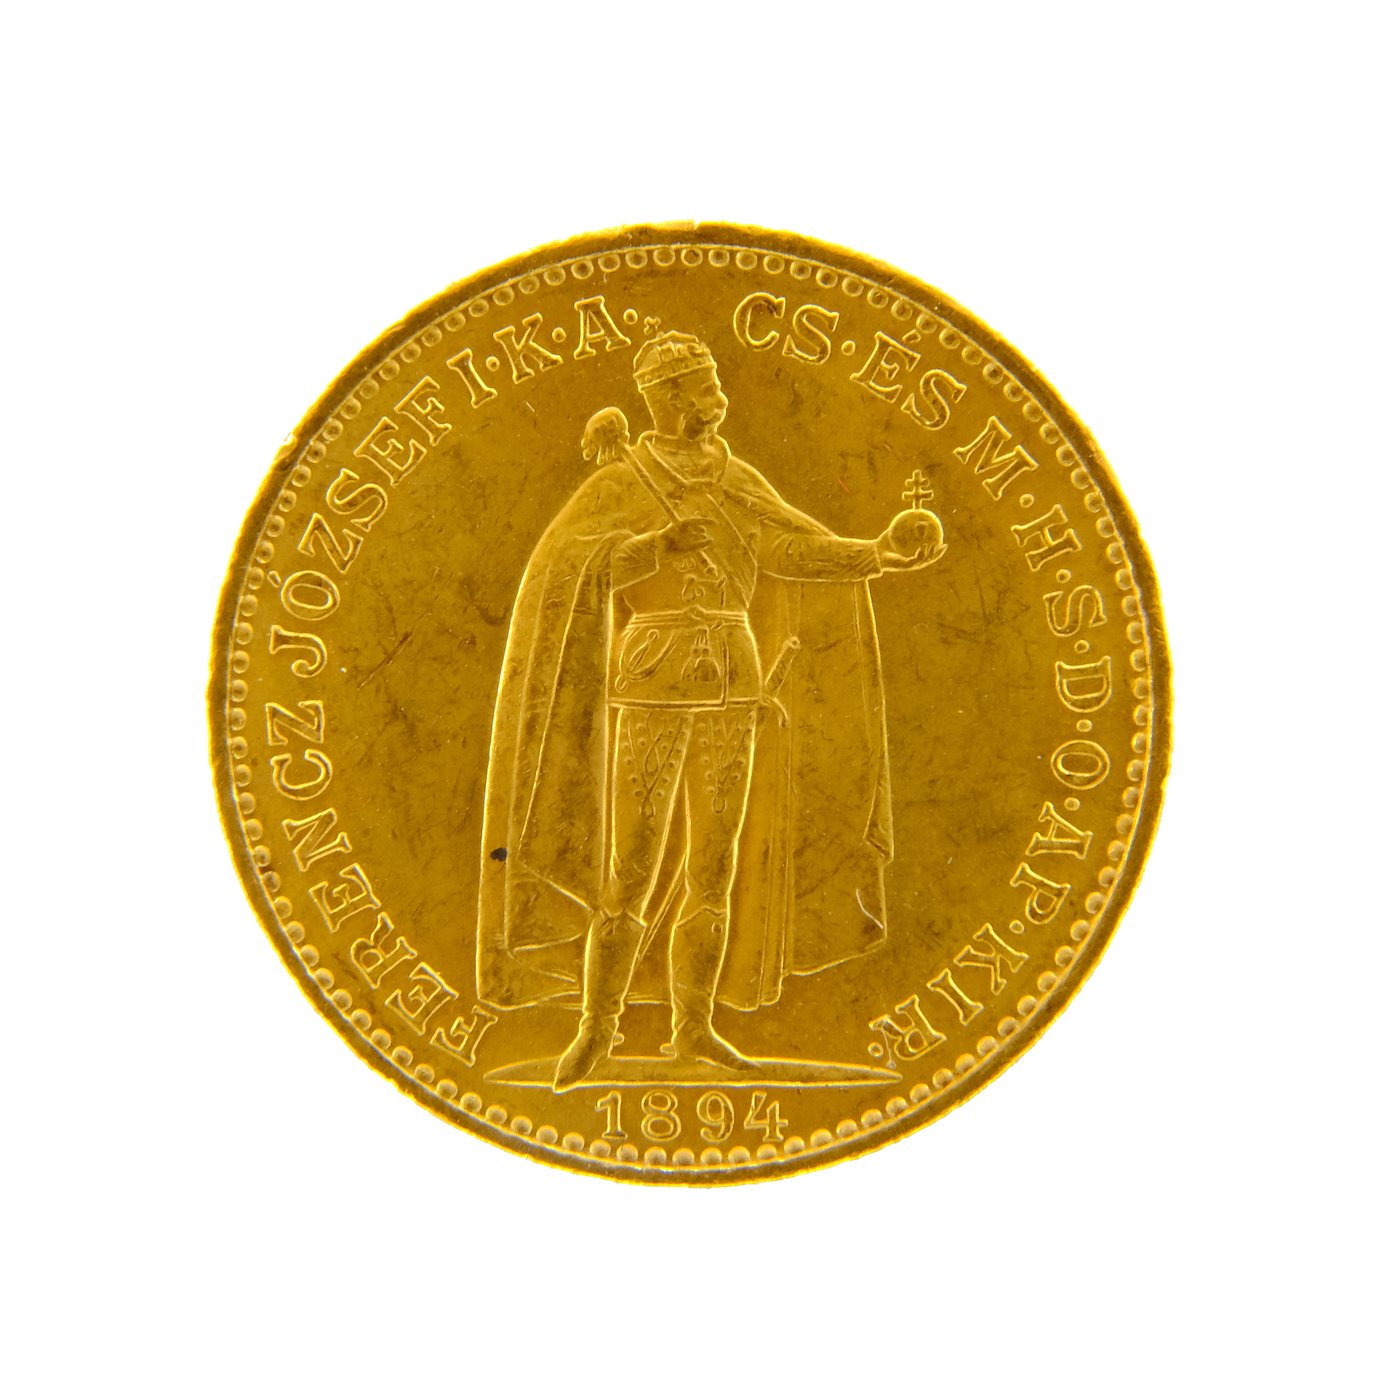 .. - Rakousko Uhersko zlatá 20 Koruna 1894 K.B. uherská, zlato 900/1000, hrubá hmotnost 6,78g